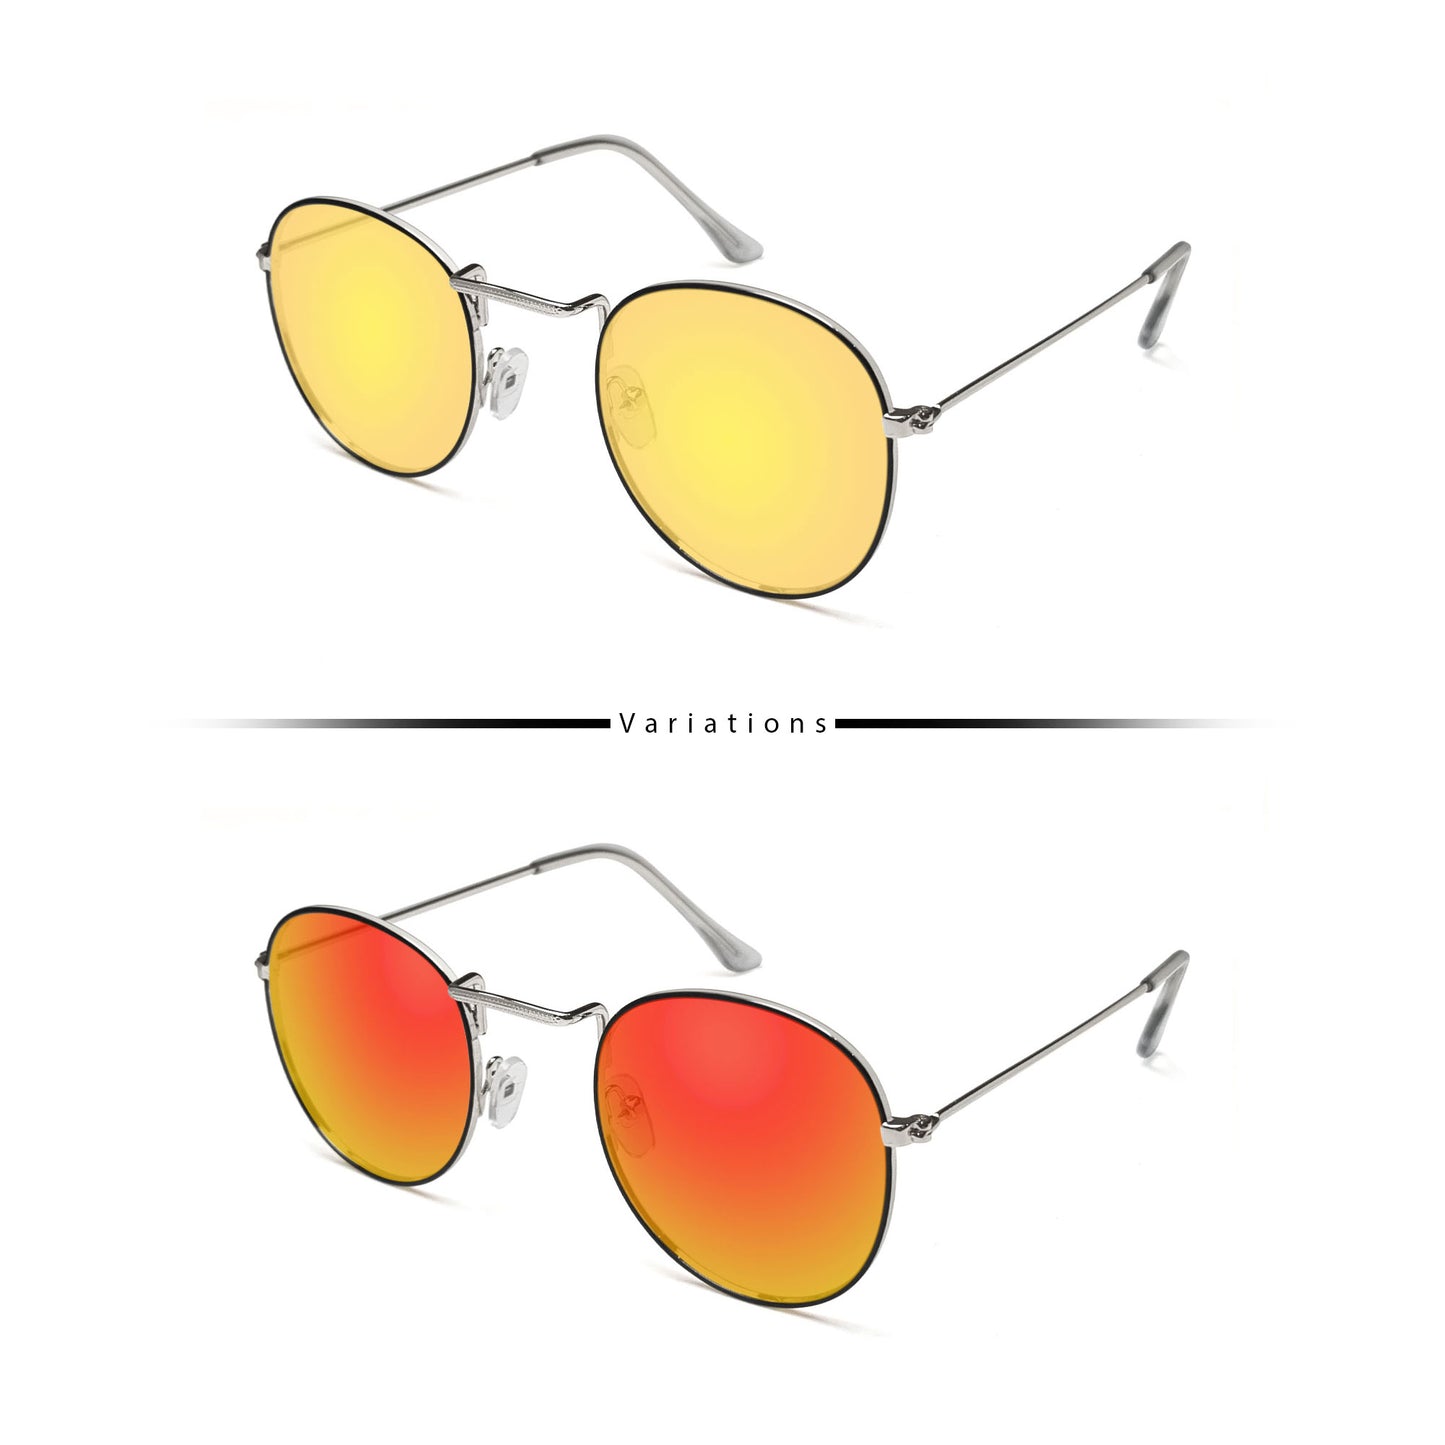 Peculiar Eyewear LOUISE BlackSilver Round Metal Frame Sunglasses Shades For Men and Women